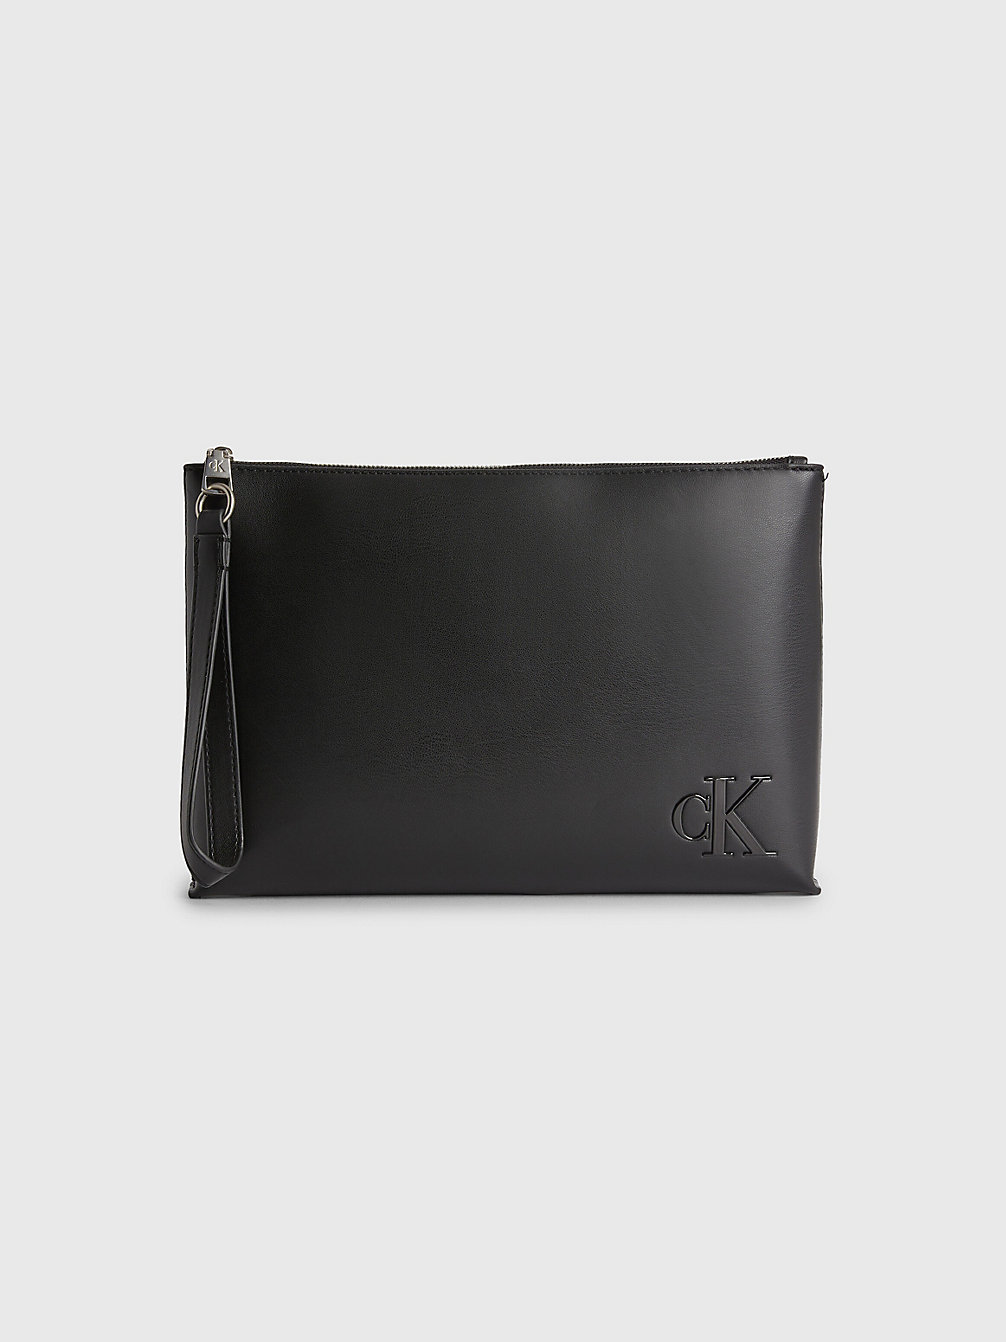 BLACK Makeup Bag And Key Fob Gift Set undefined women Calvin Klein